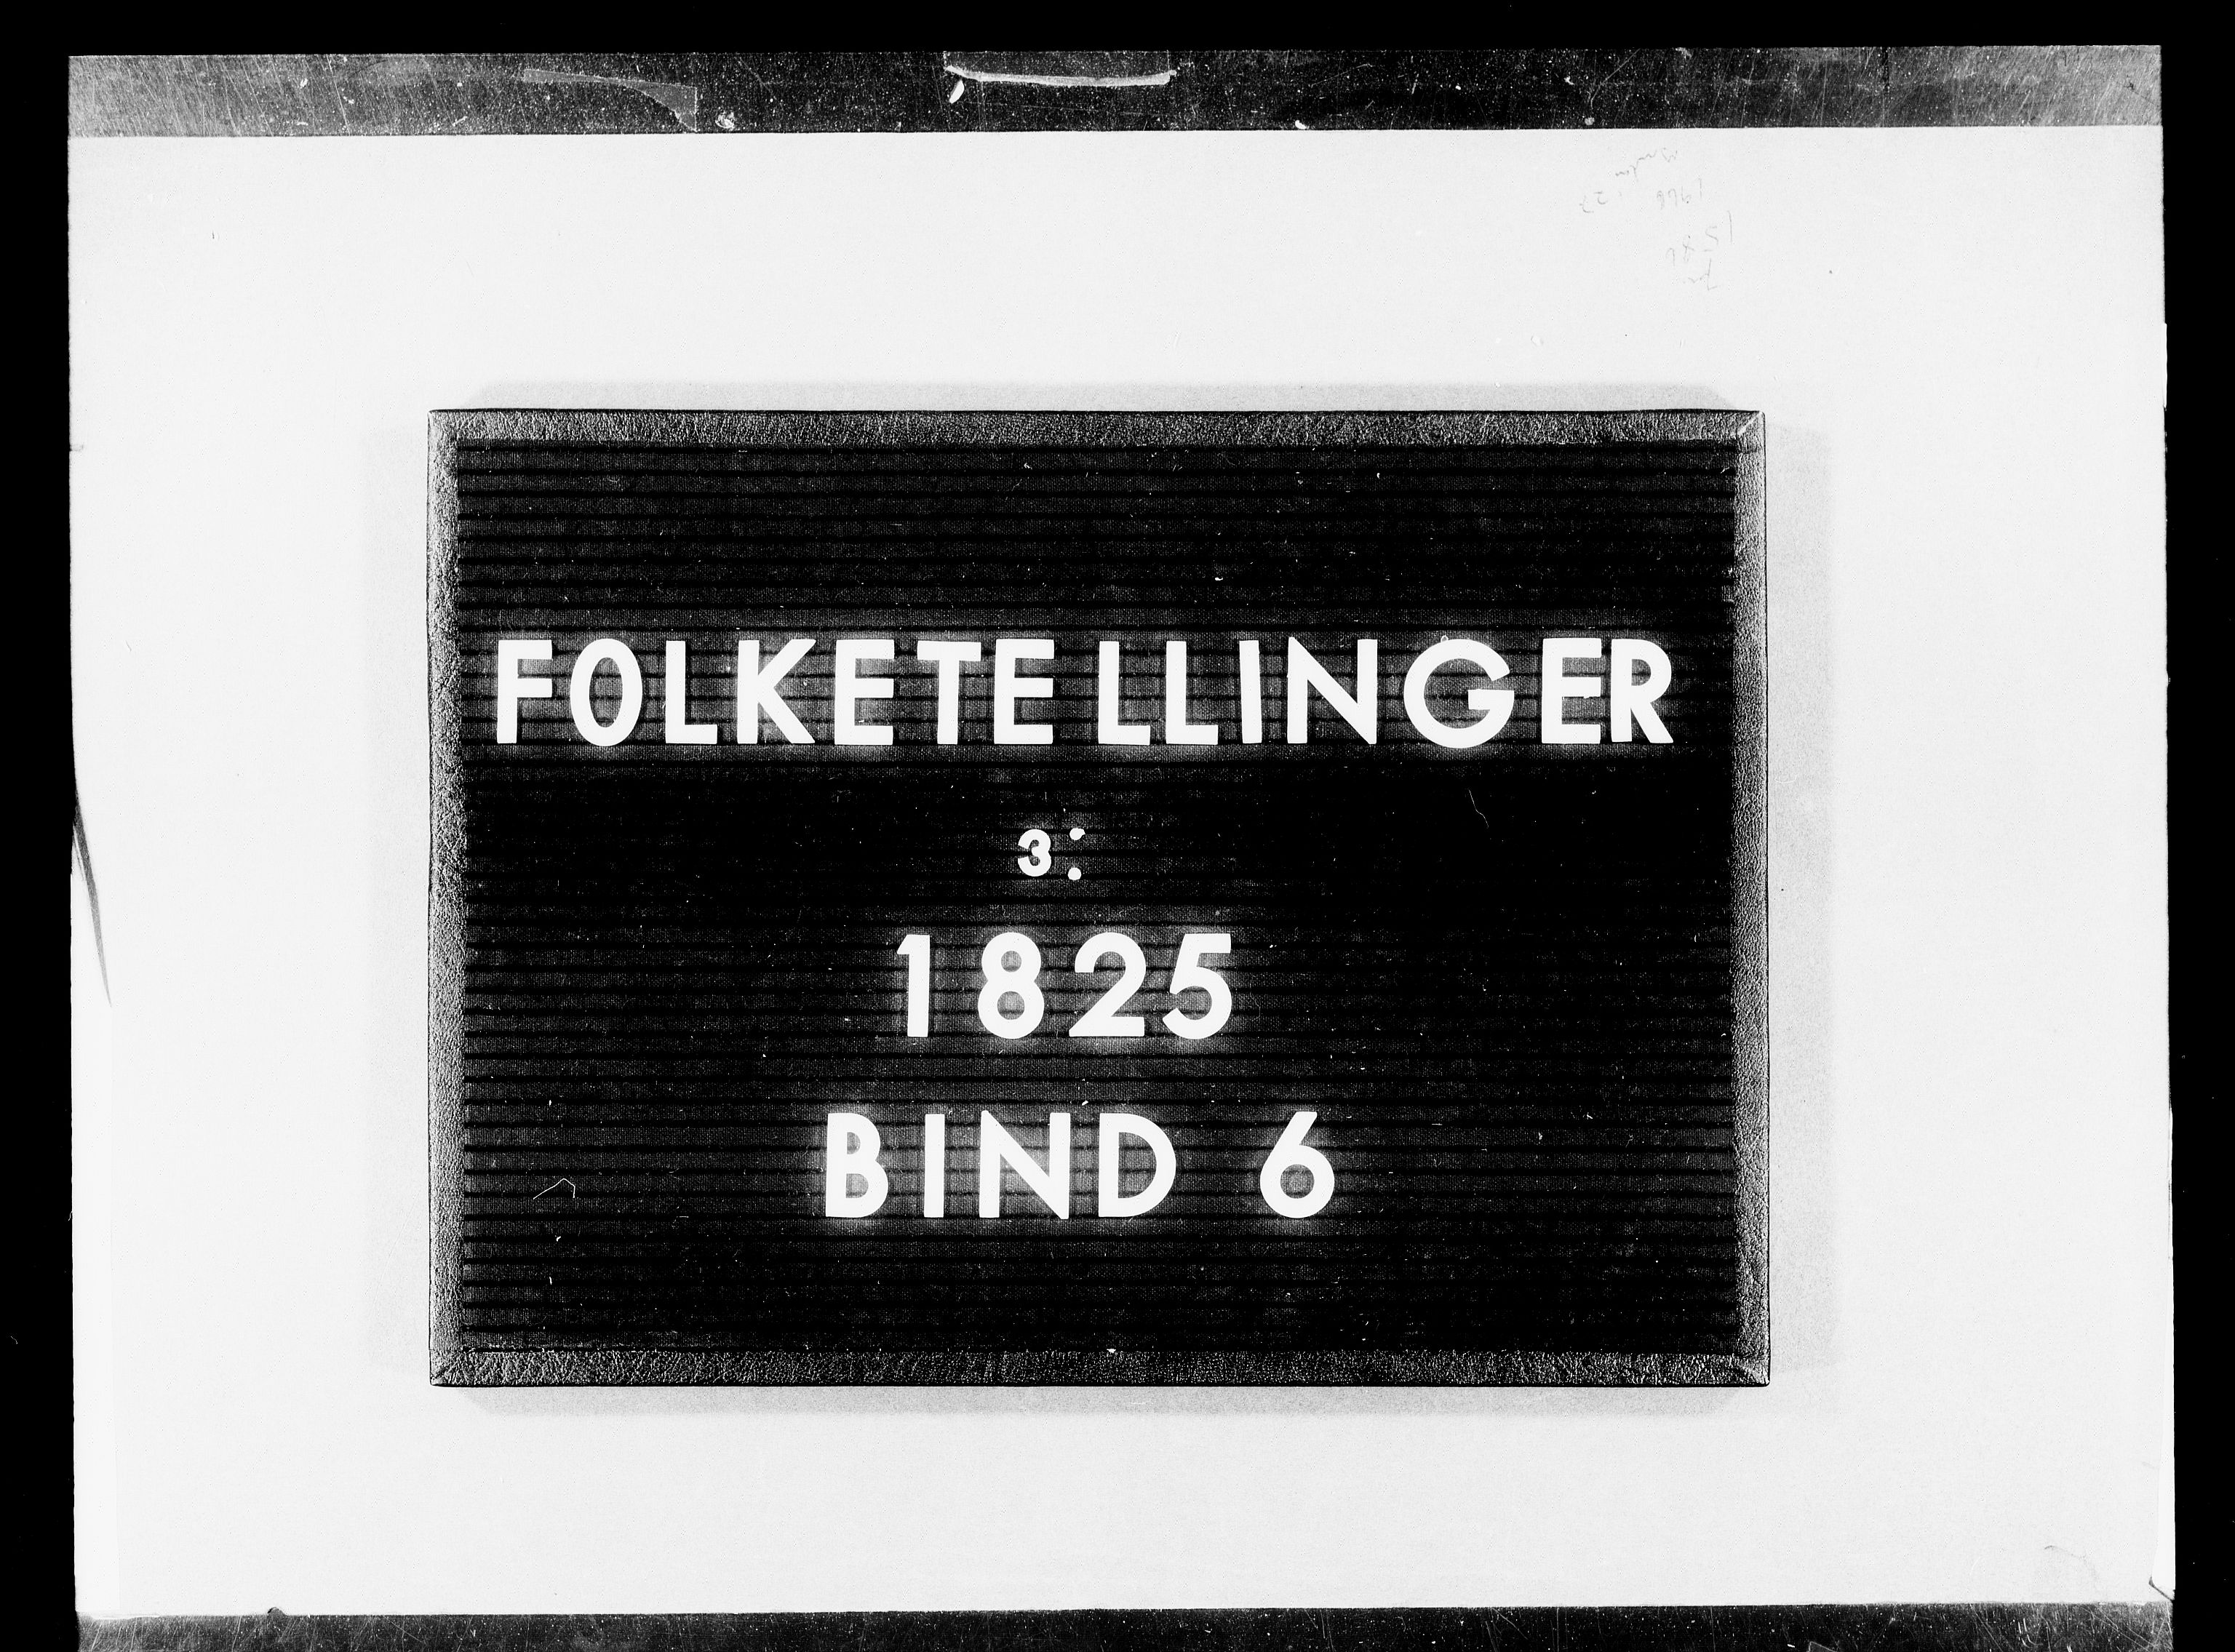 RA, Folketellingen 1825, bind 6: Kristians amt, 1825